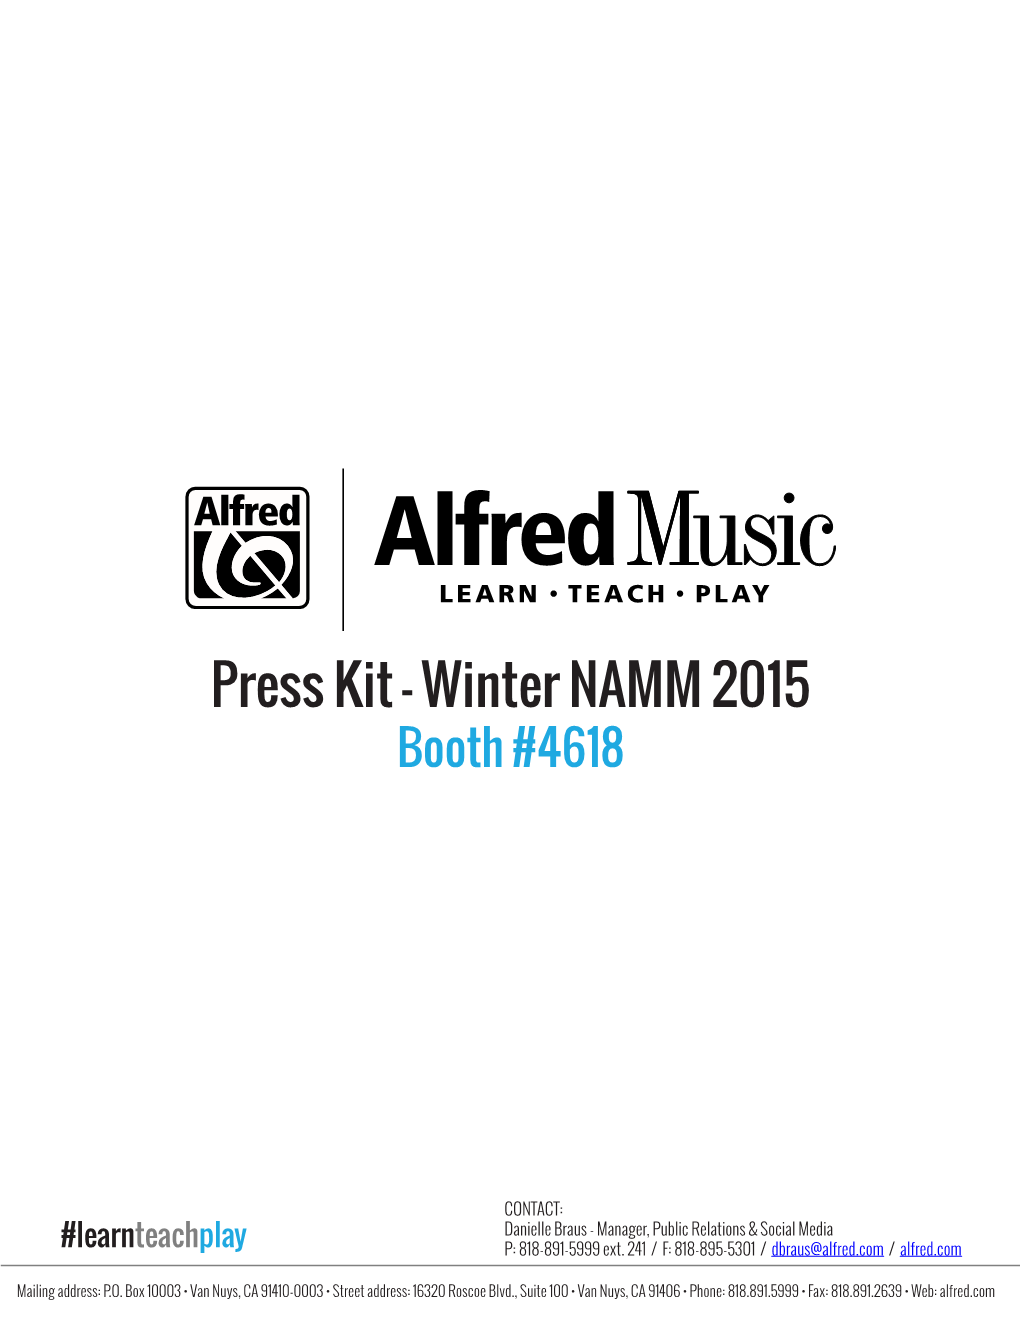 Press Kit – Winter NAMM 2015 Booth #4618